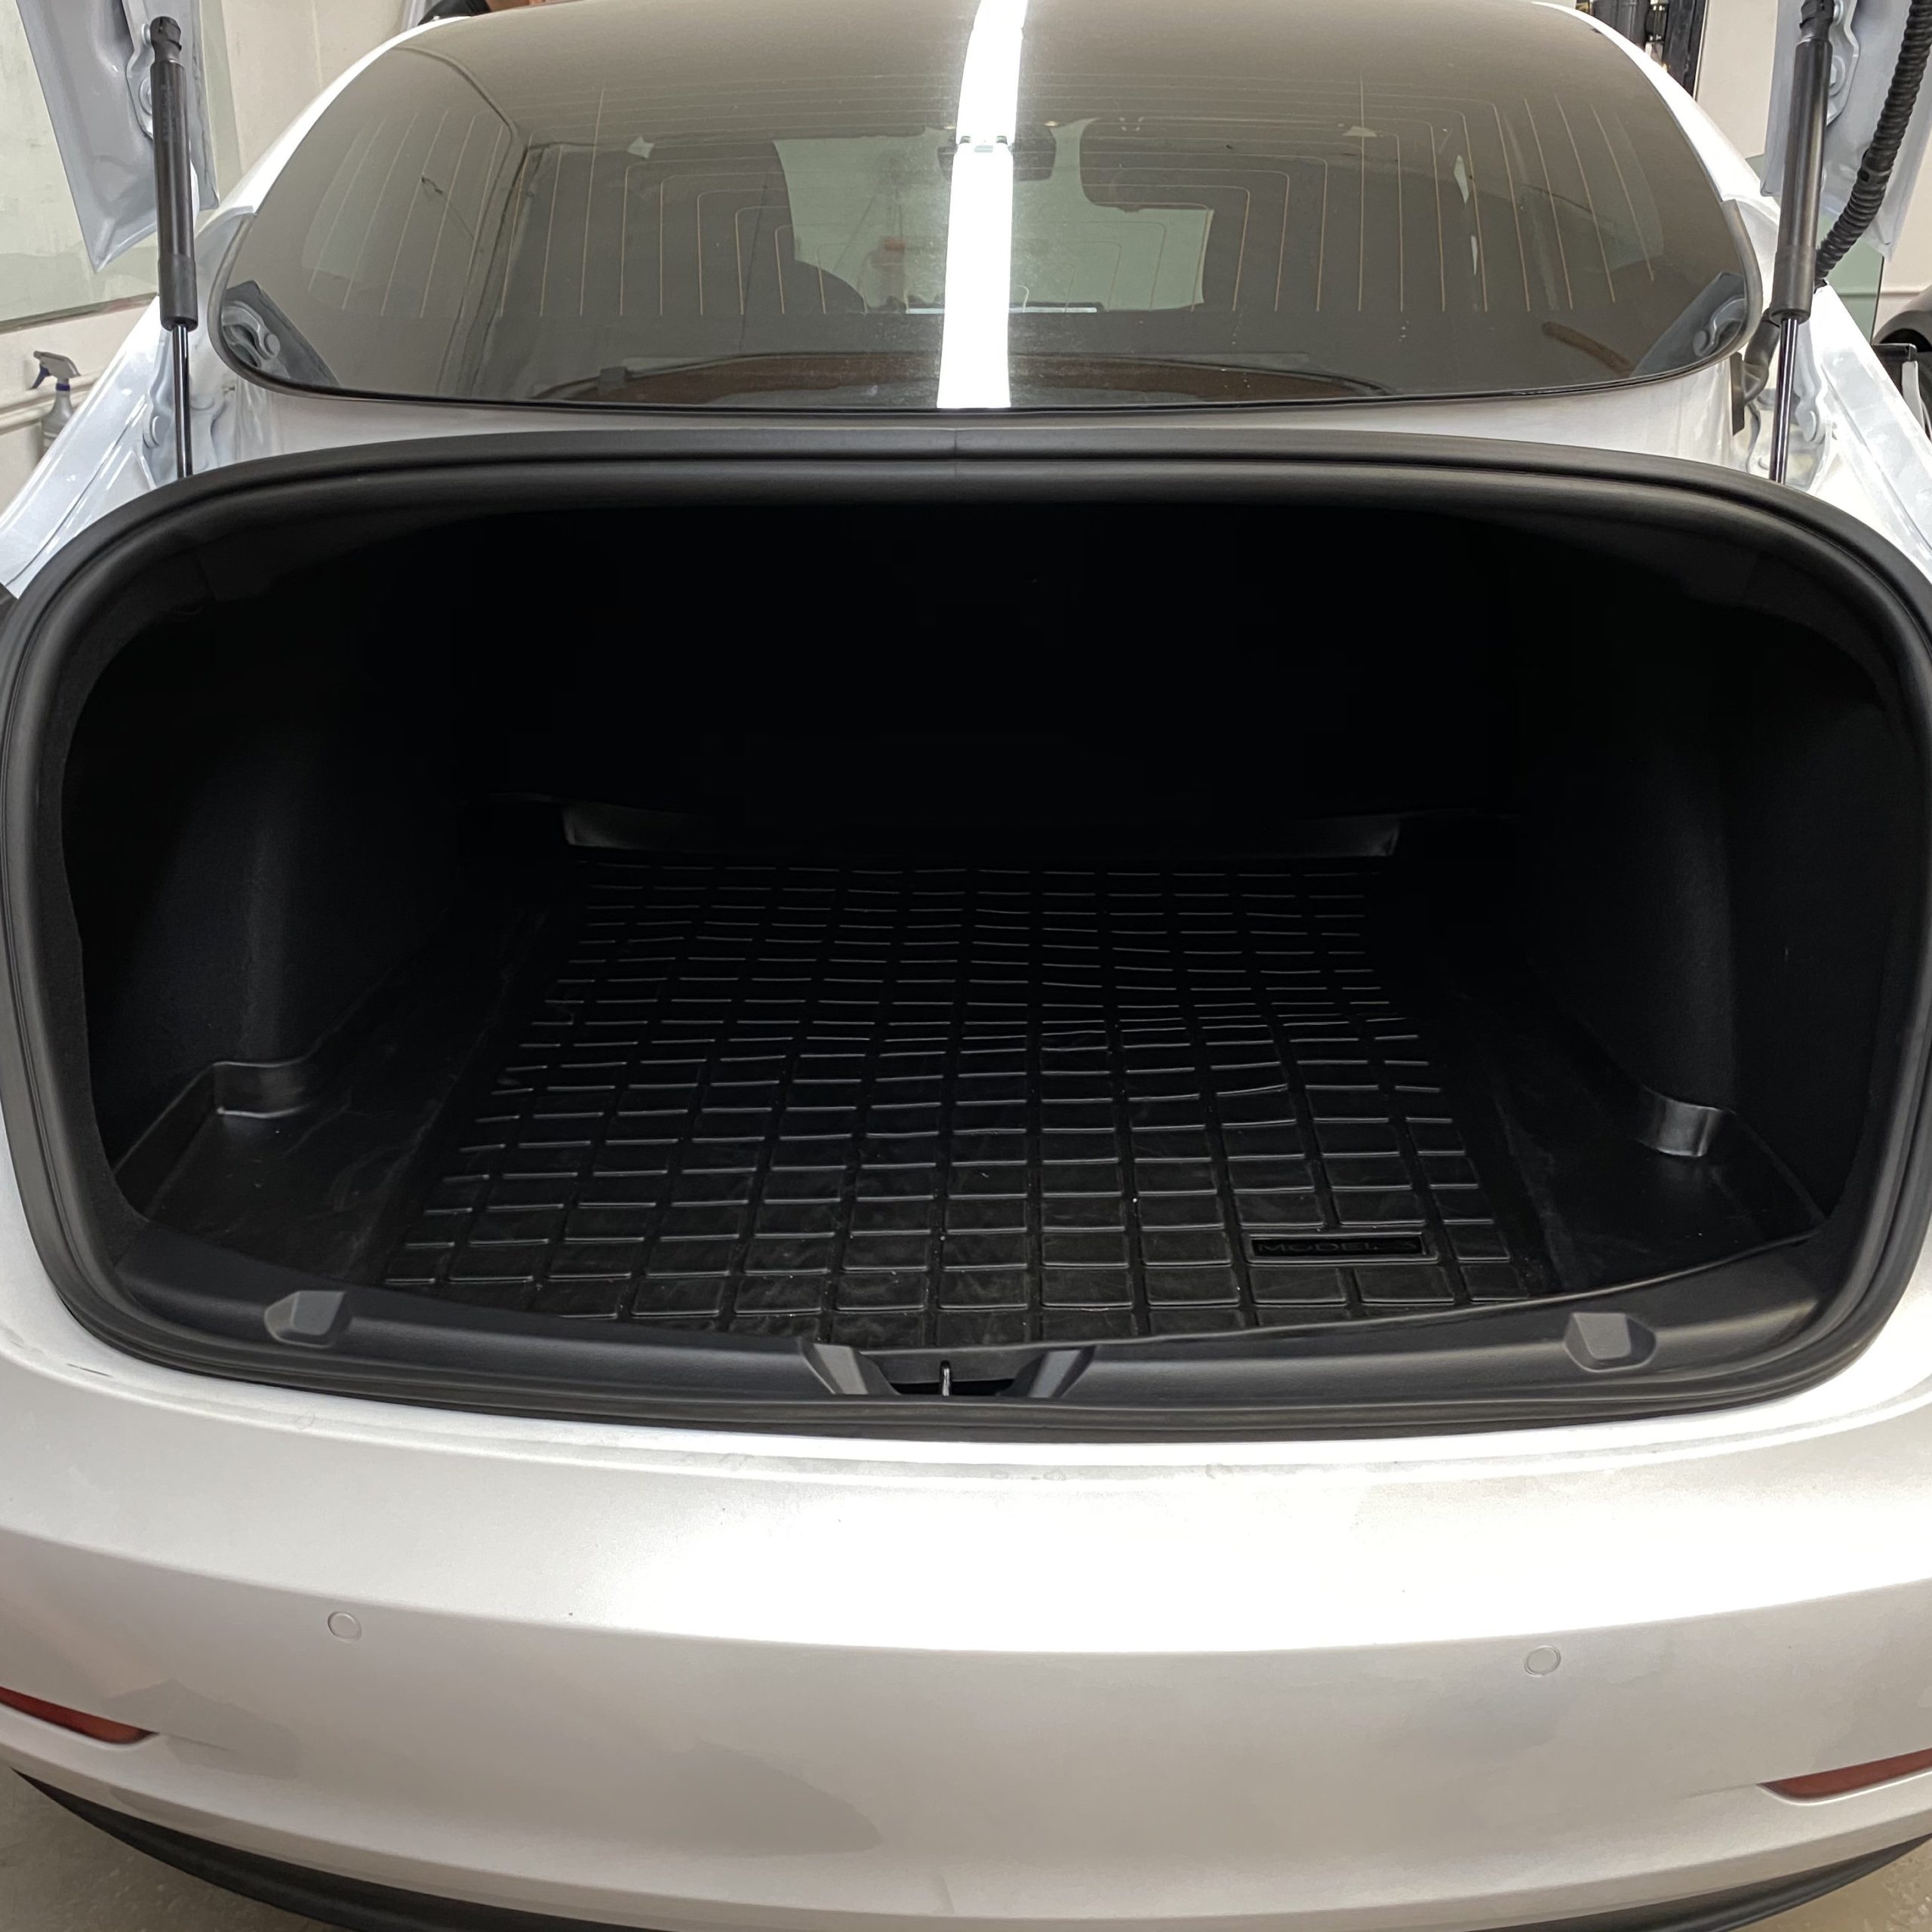 Tesla LED Beleuchtung im Kofferraum austauschen - Teslawissen